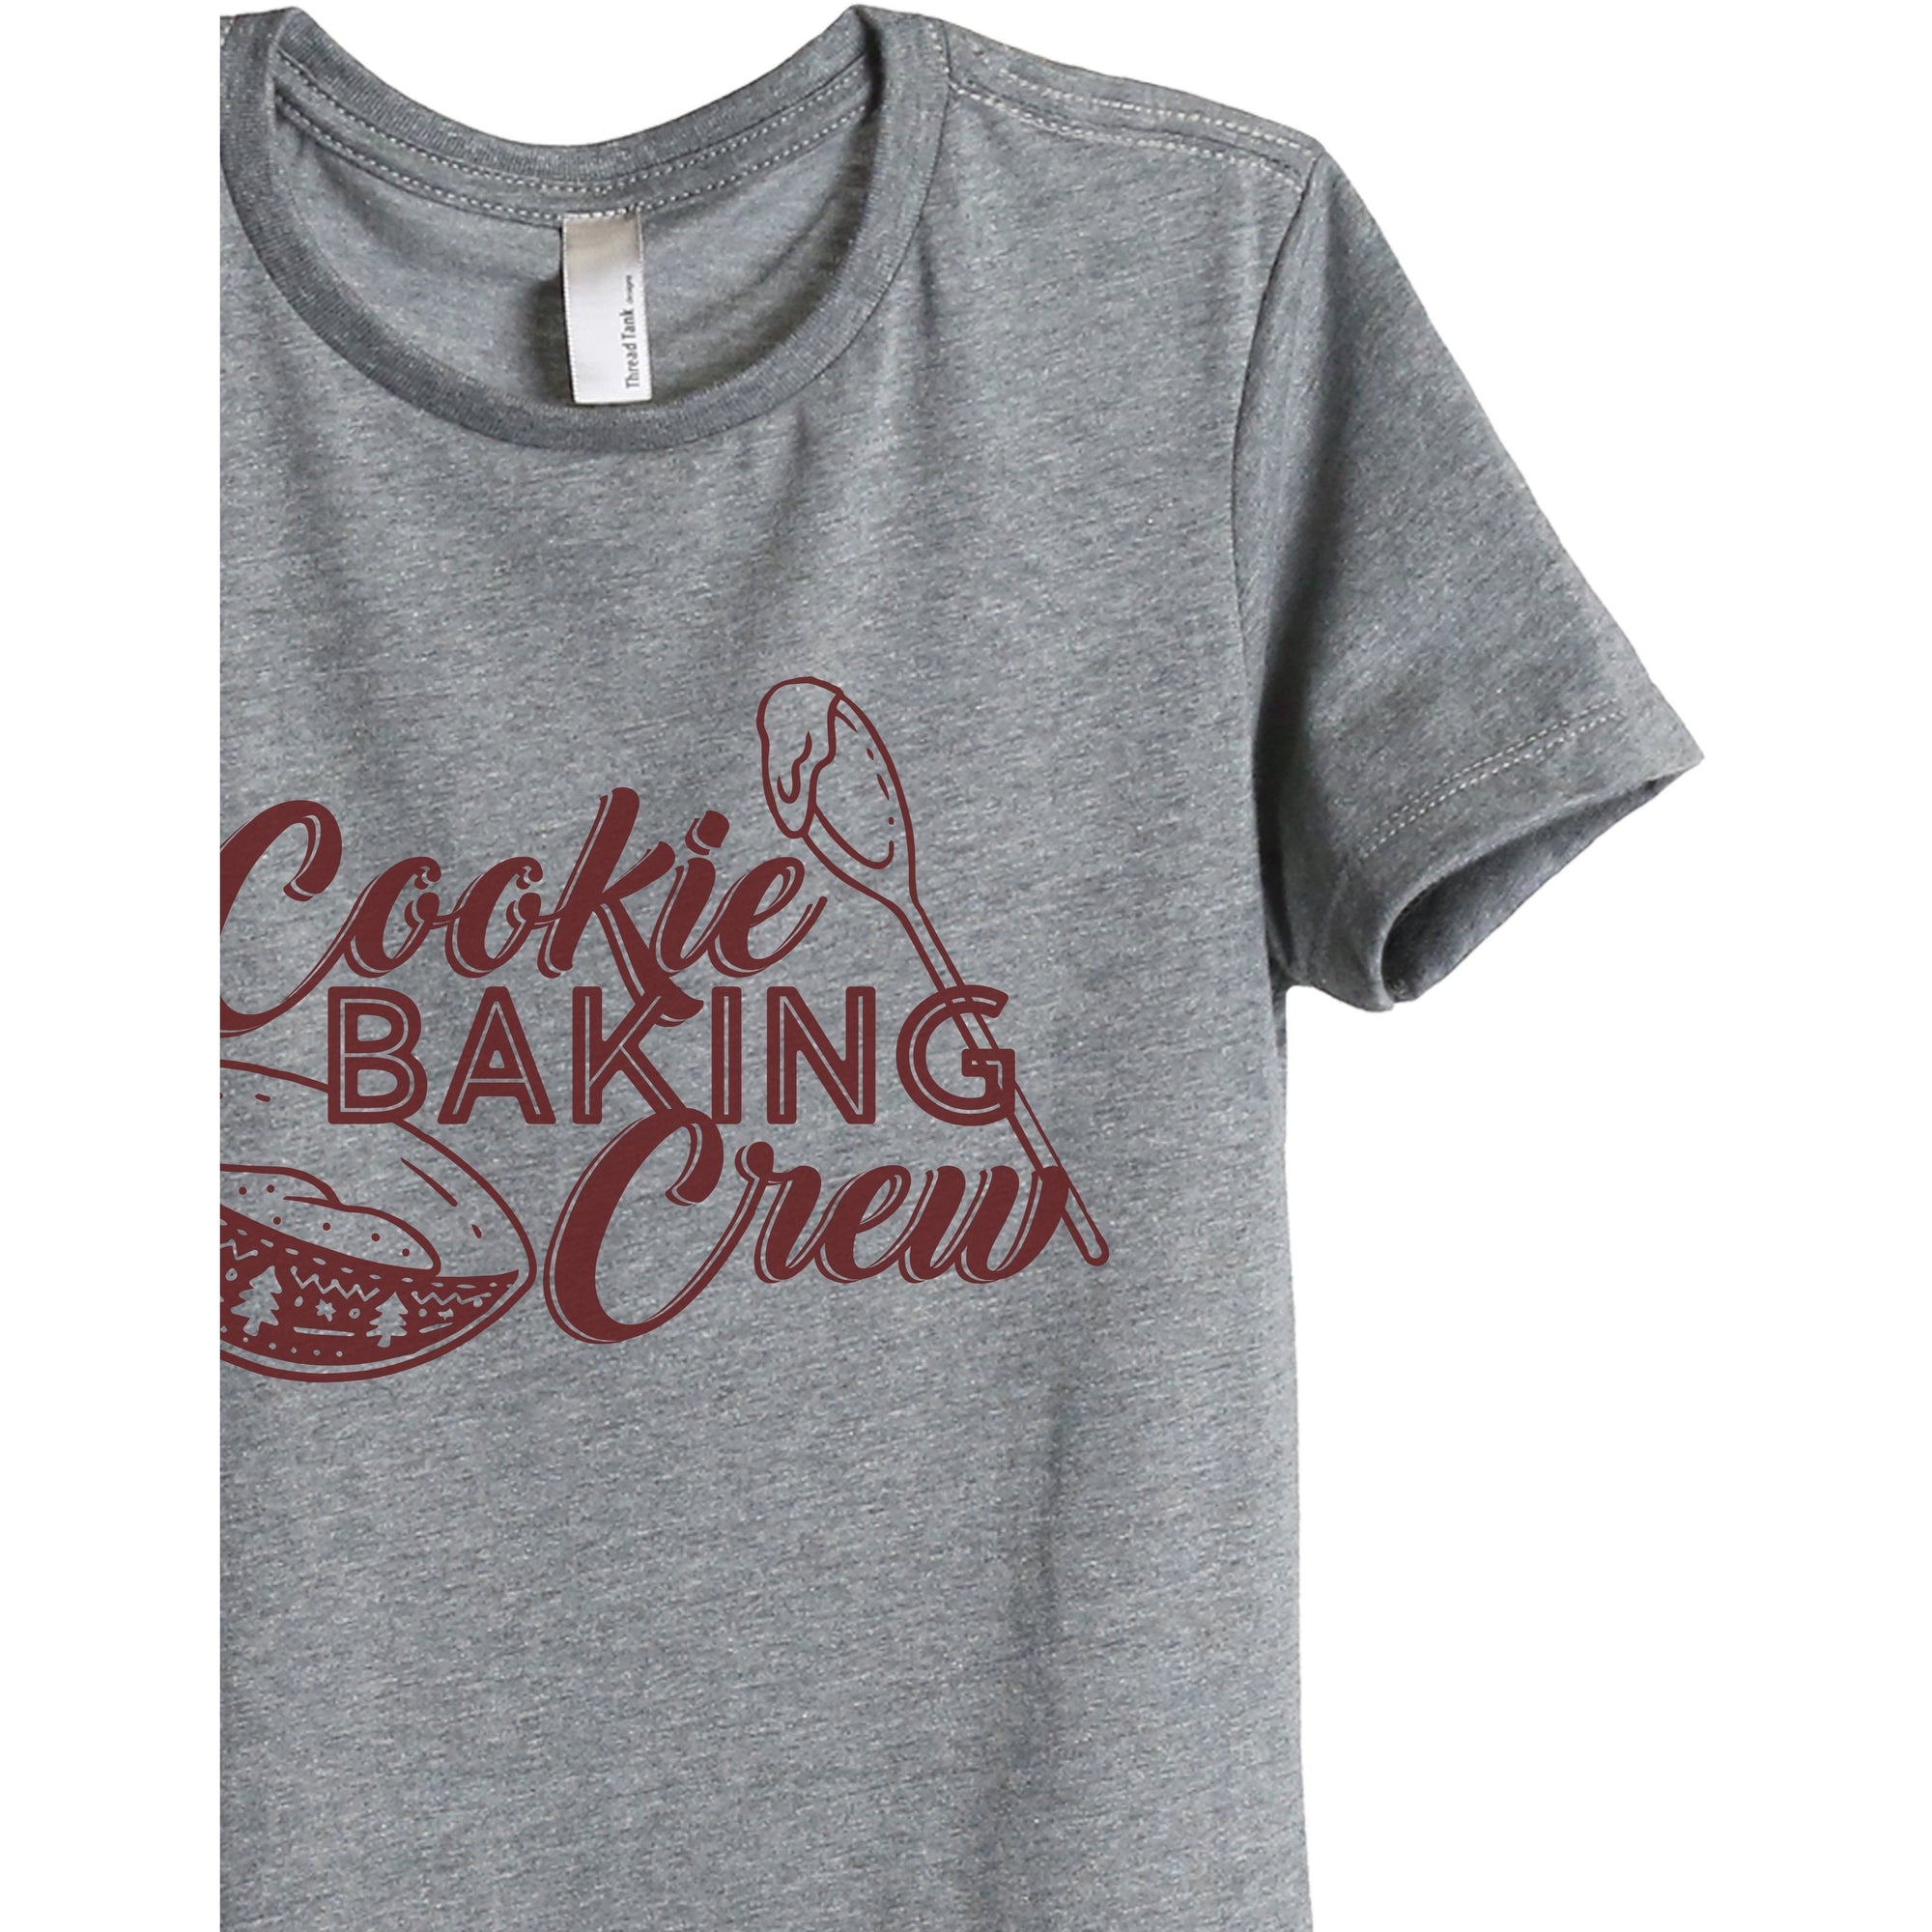 Cookie Baking Crew Women's Relaxed Crewneck T-Shirt Top Tee Heather Grey Scarlet